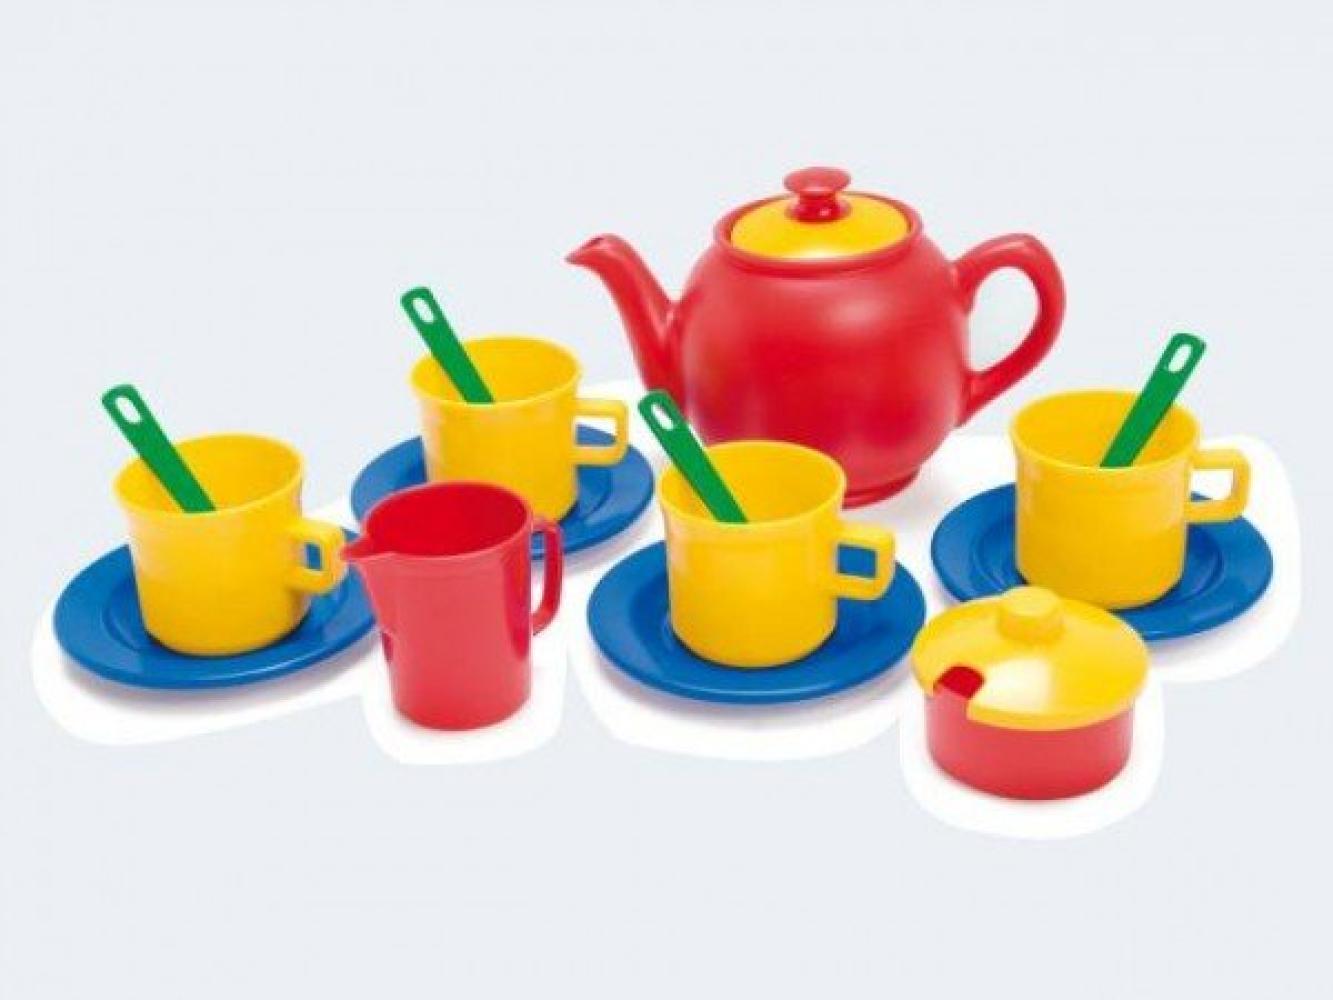 Dantoy - Spielzeug-Teeservice (17 Teile) Bild 1